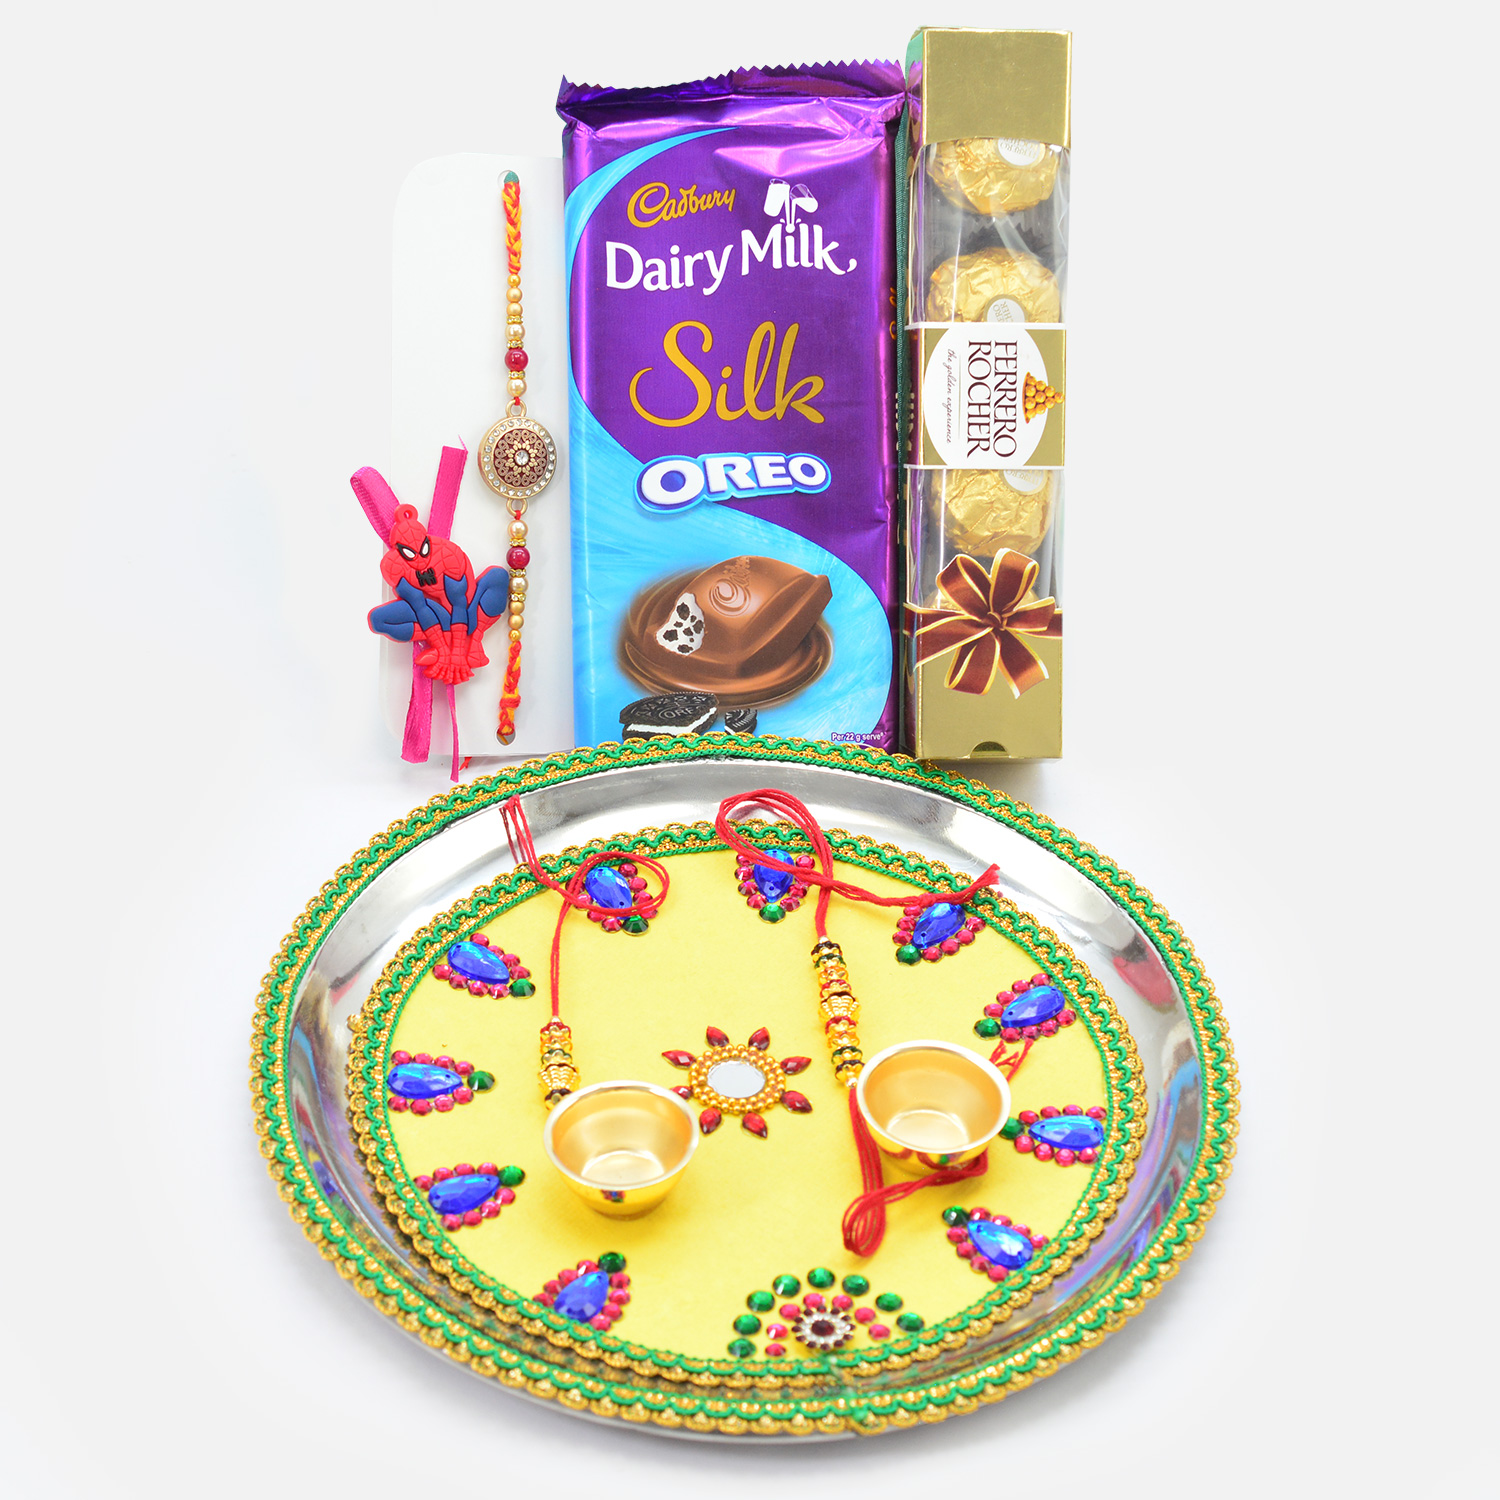 Awesome Looking Puja Thali with Rakhis and Silk Oreo Ferrero Rocher Chocolates